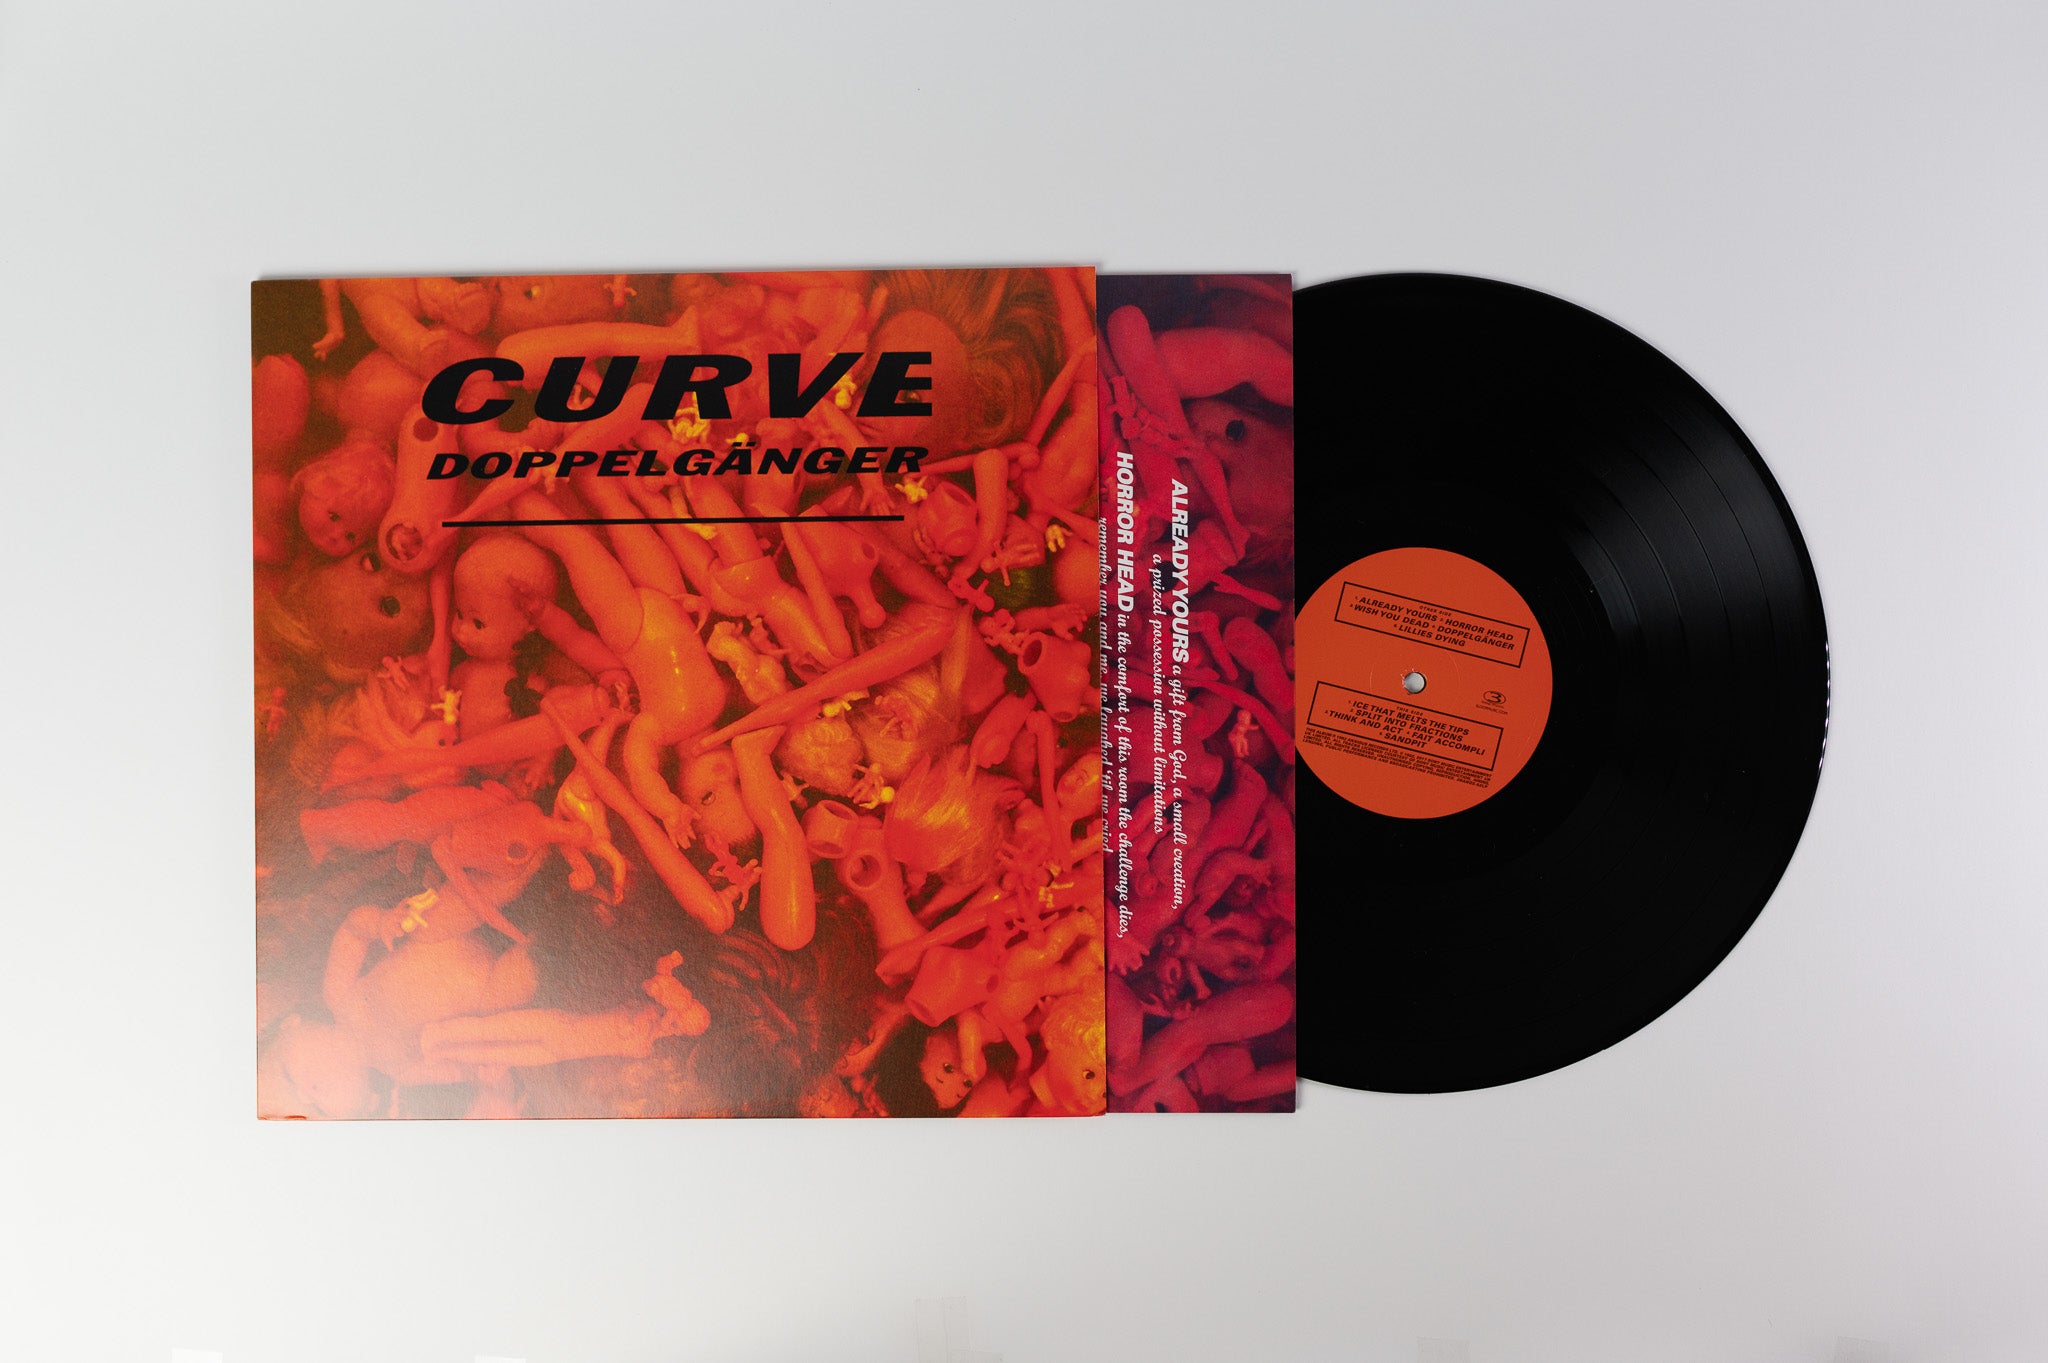 Curve - Doppelgänger on 3 Loop Music Reissue